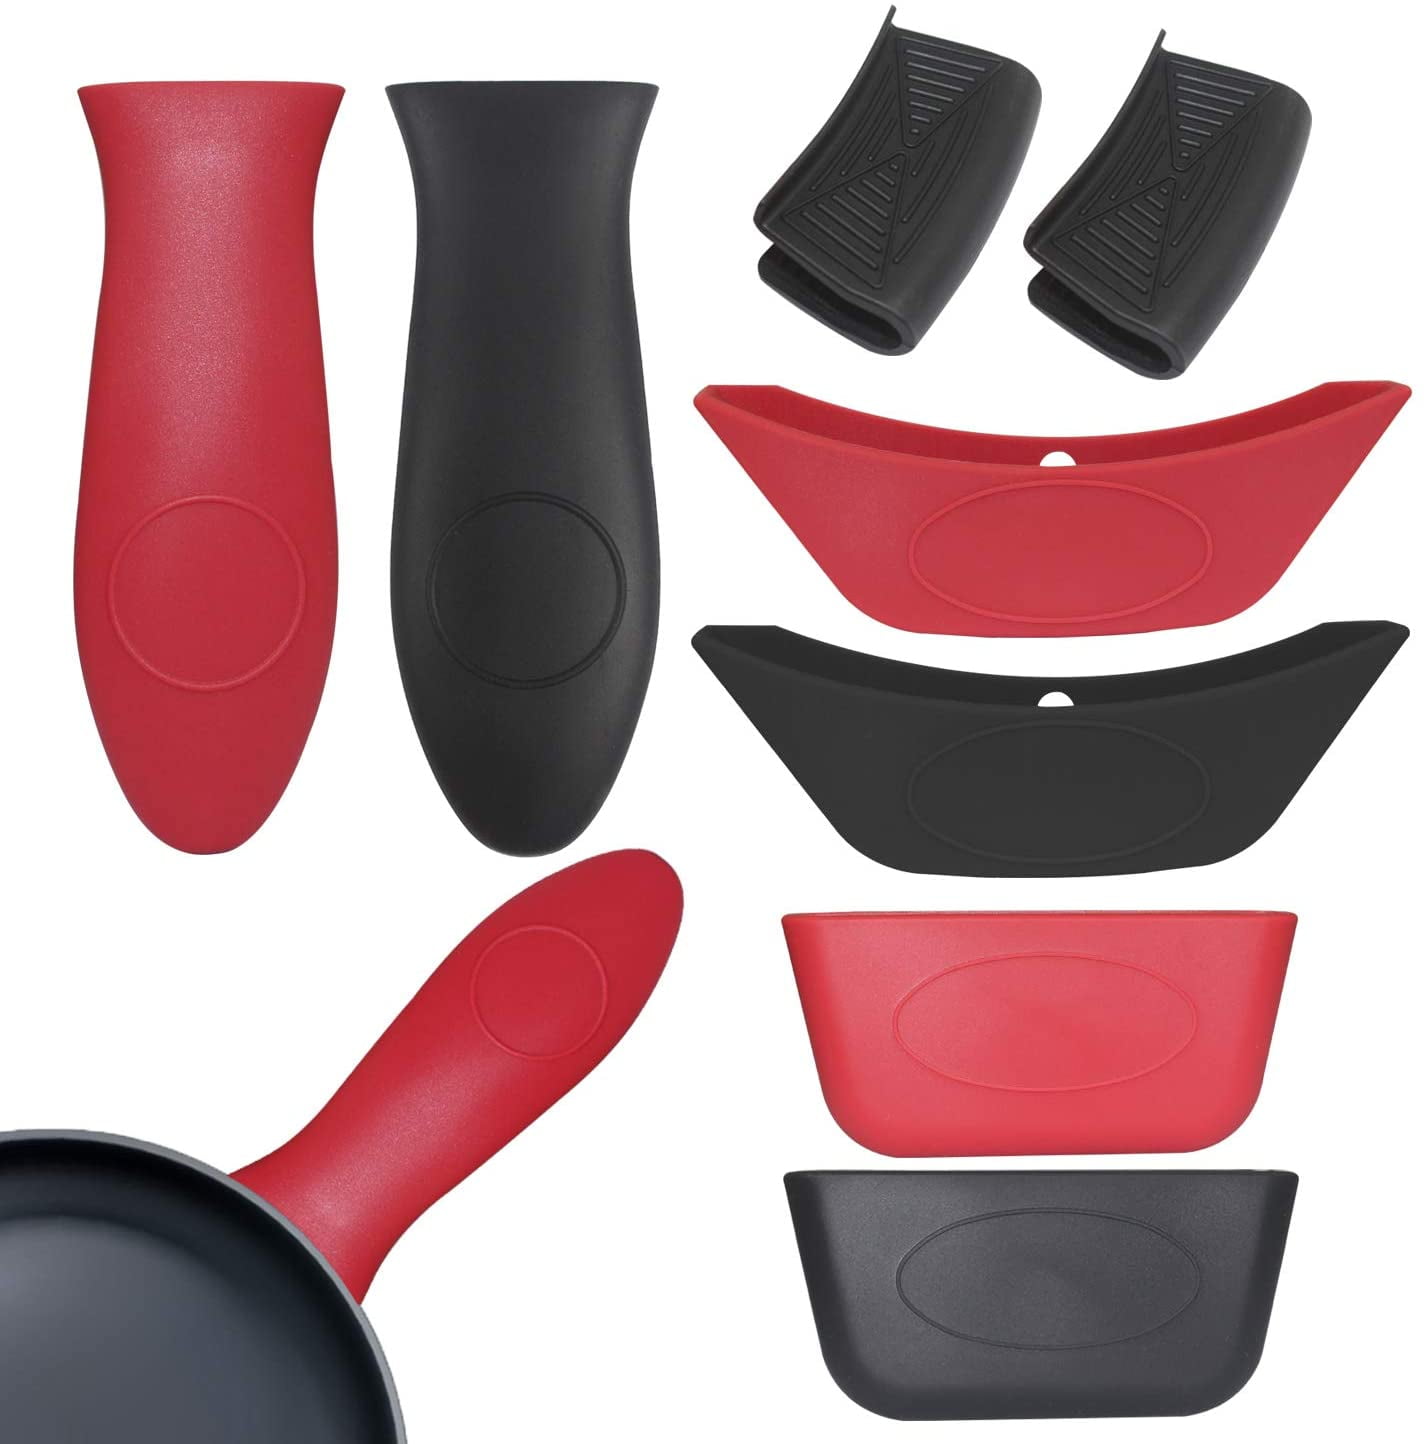 Details about   Pot Holder for Skillet Handle Cast Iron Potholder Silicone Rubber Hot Pan LB 